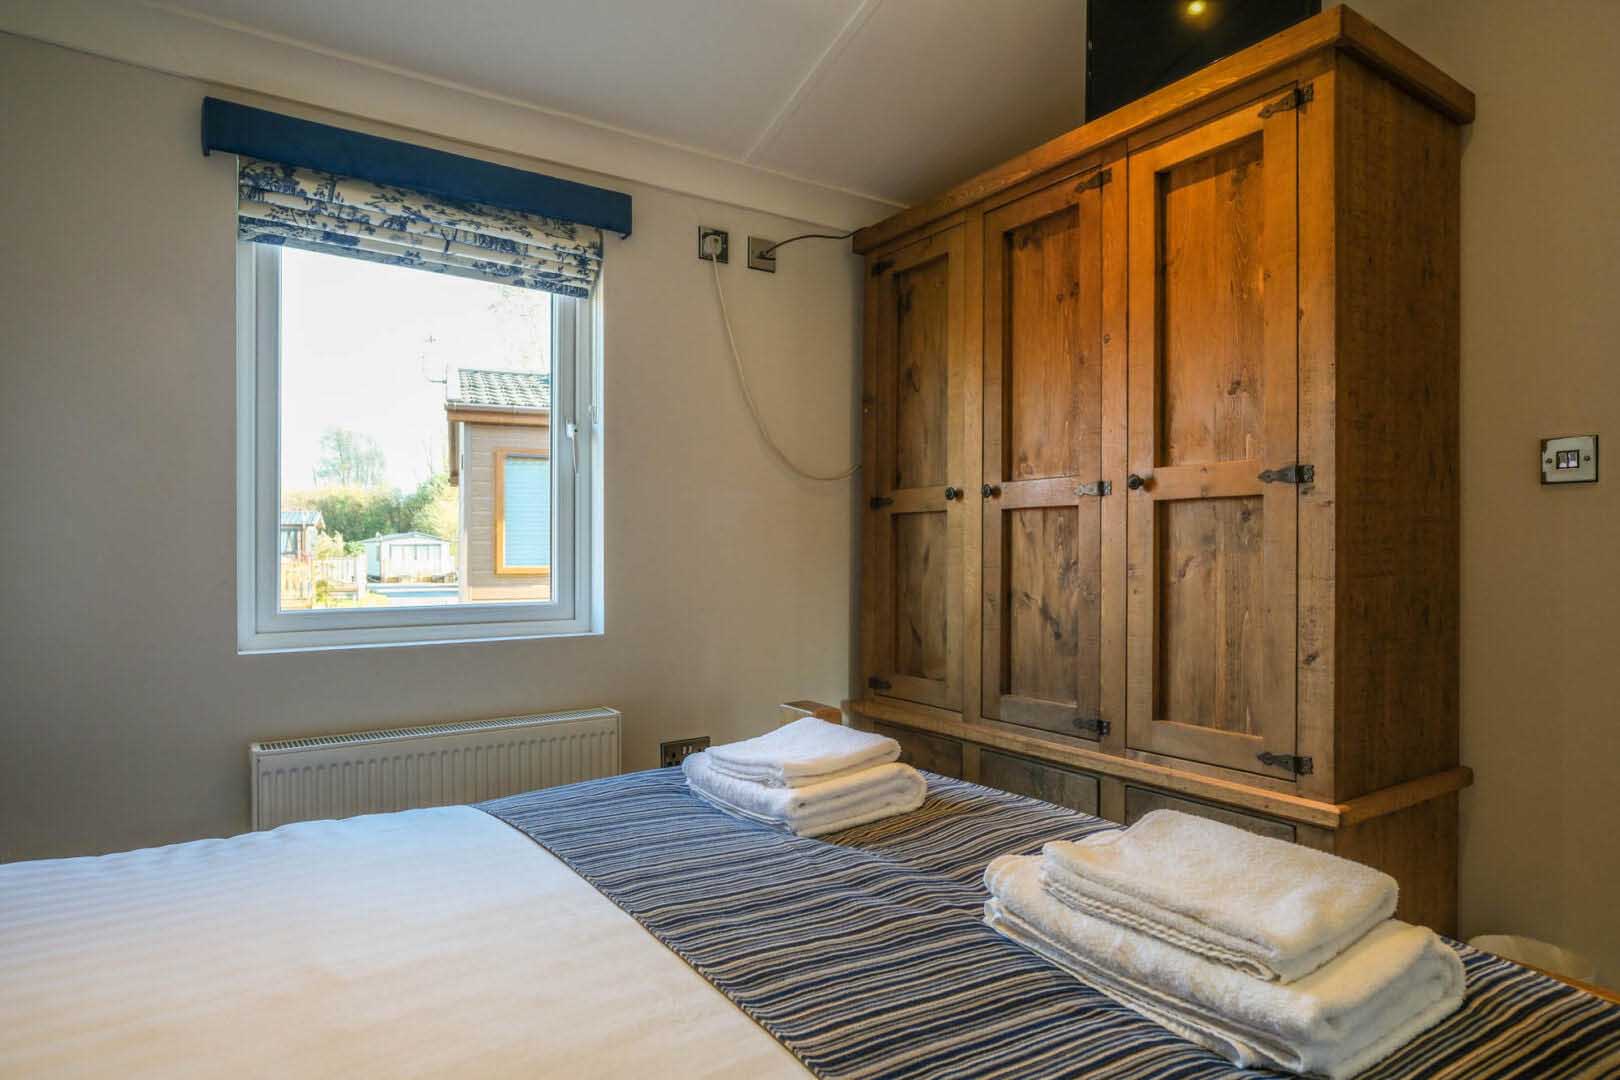 Bedroom double bed towel and dark wood wardrobe